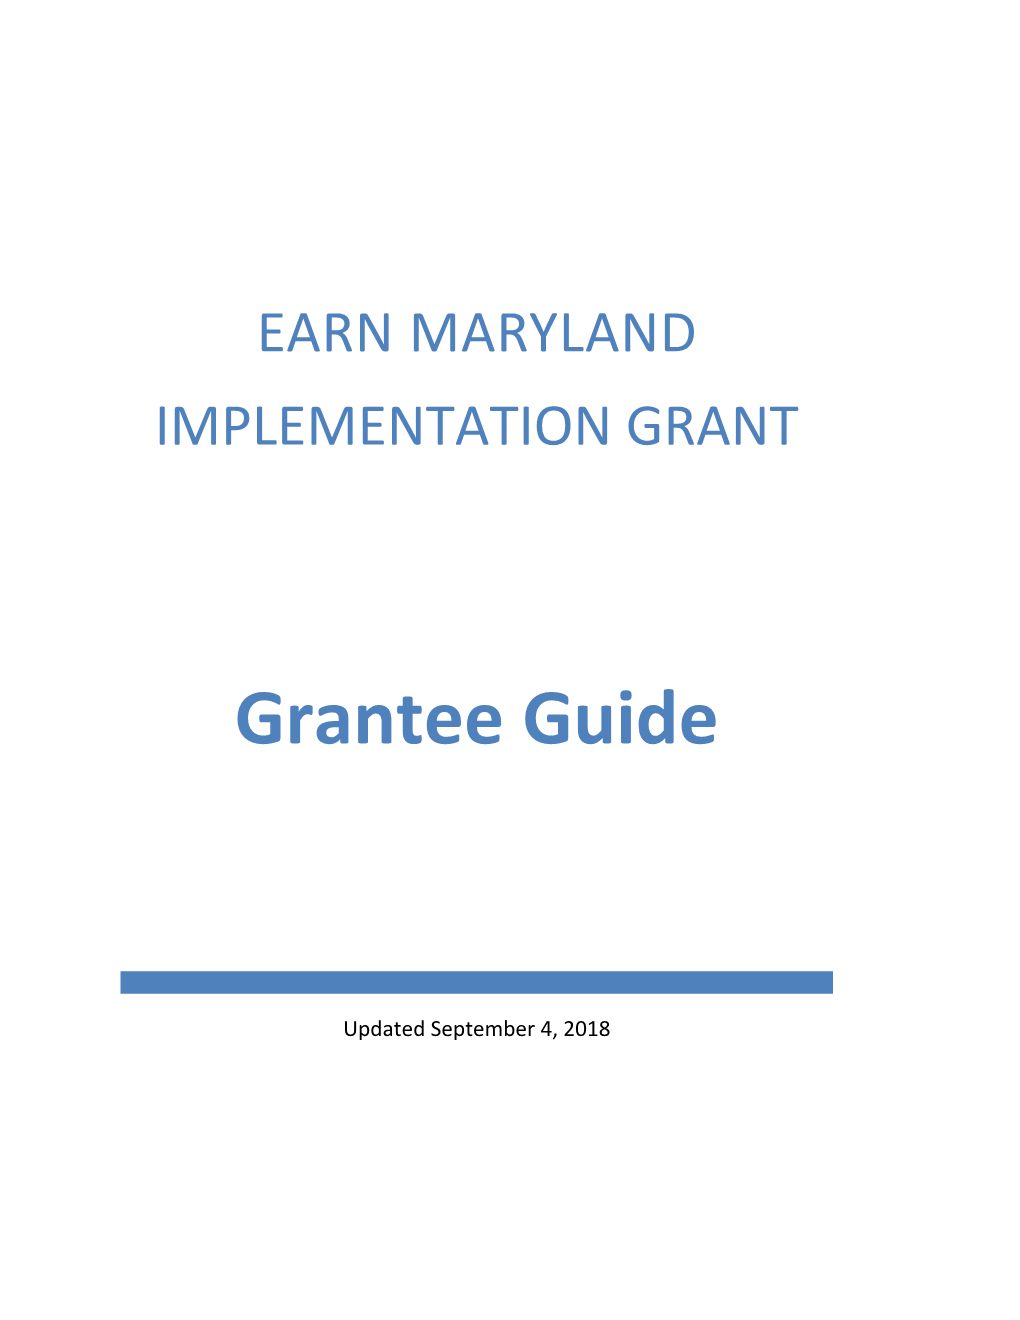 Implementation Grant